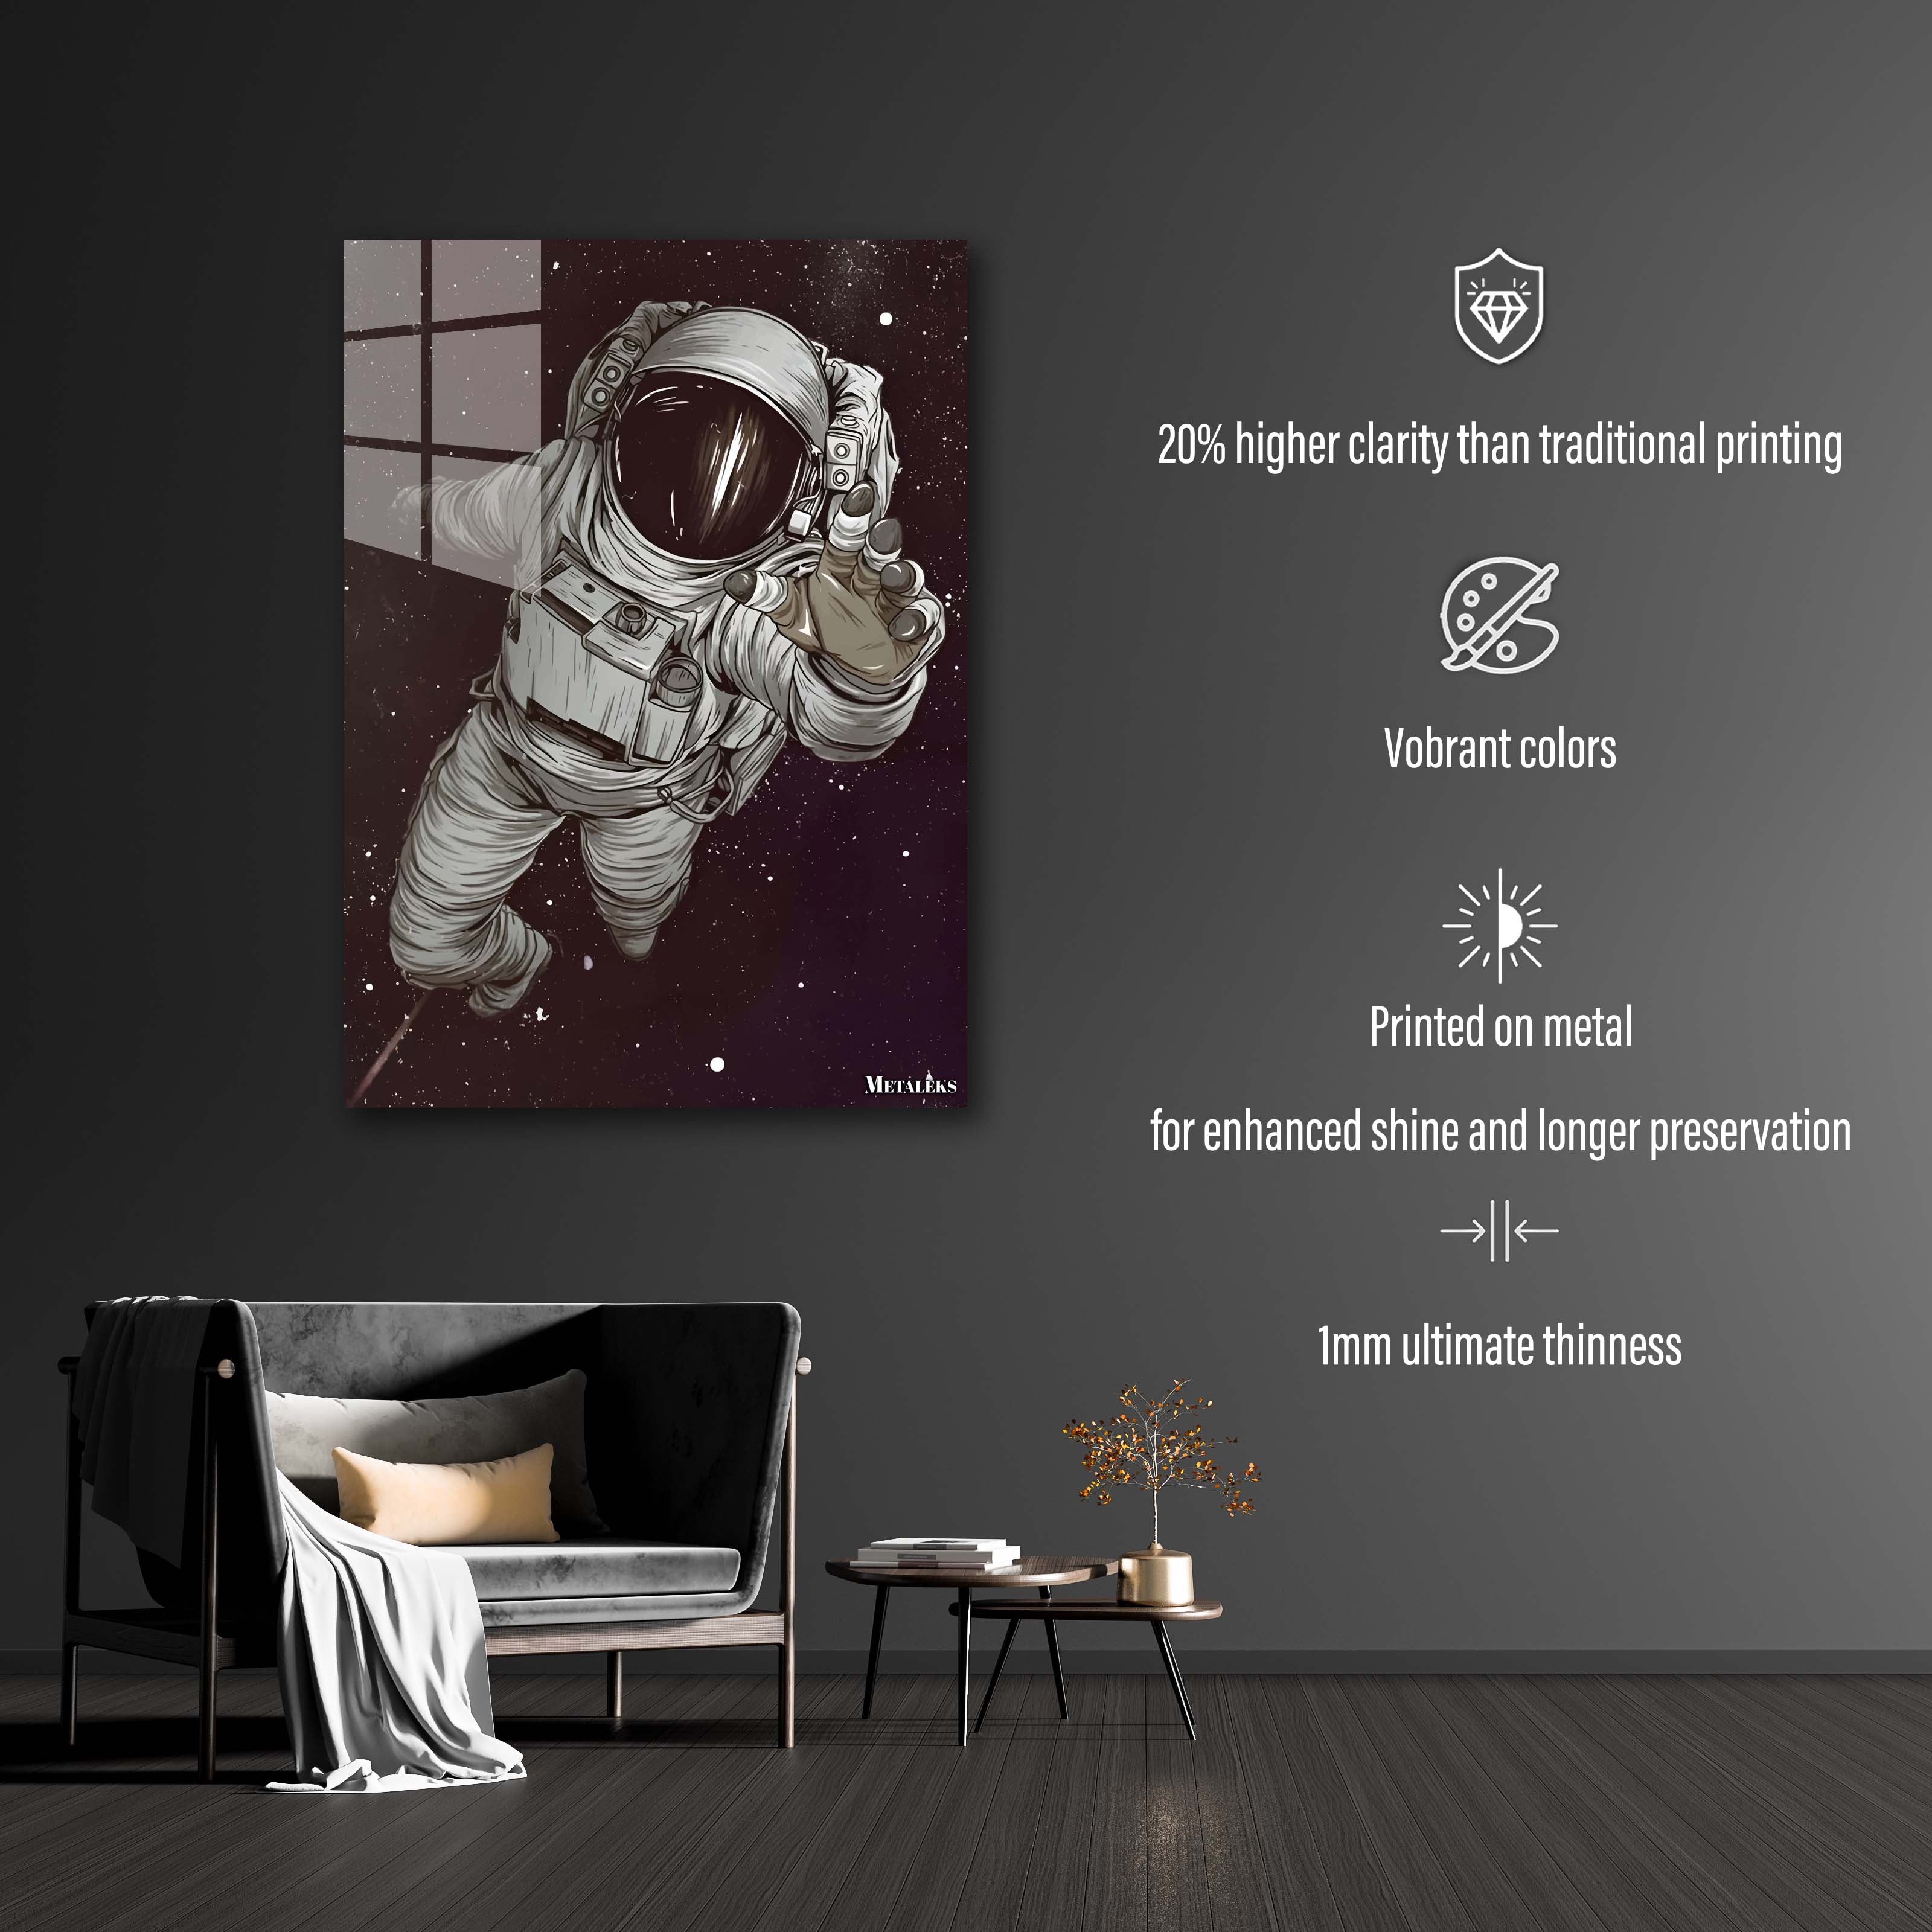 Astronaut IIVg-designed by @KHALID